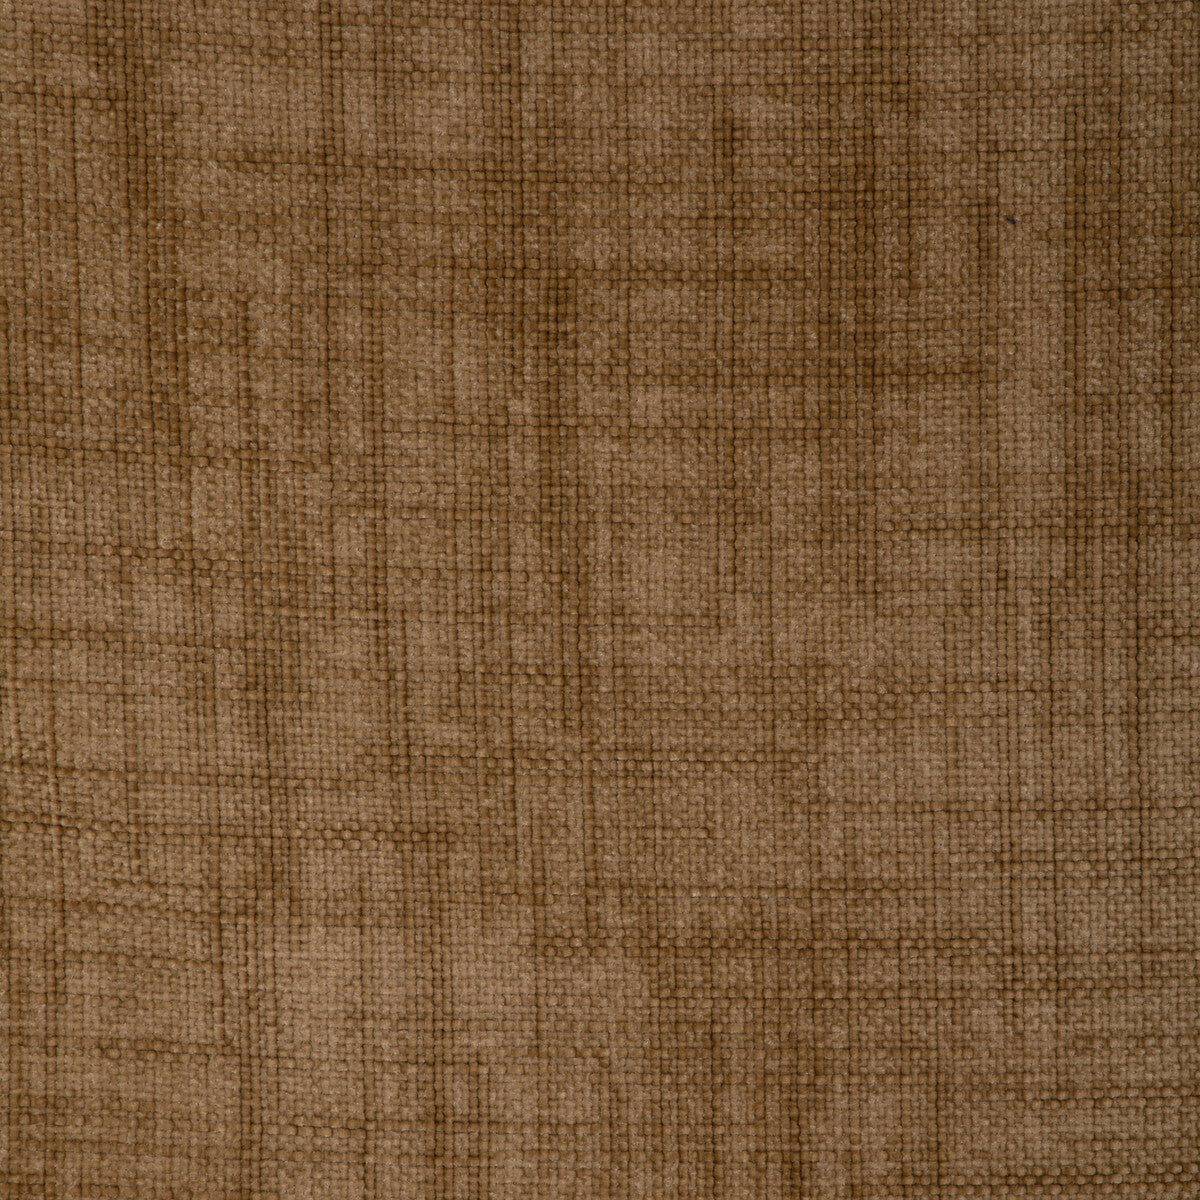 Kravet Smart fabric in 36991-4 color - pattern 36991.4.0 - by Kravet Smart in the Performance Kravetarmor collection